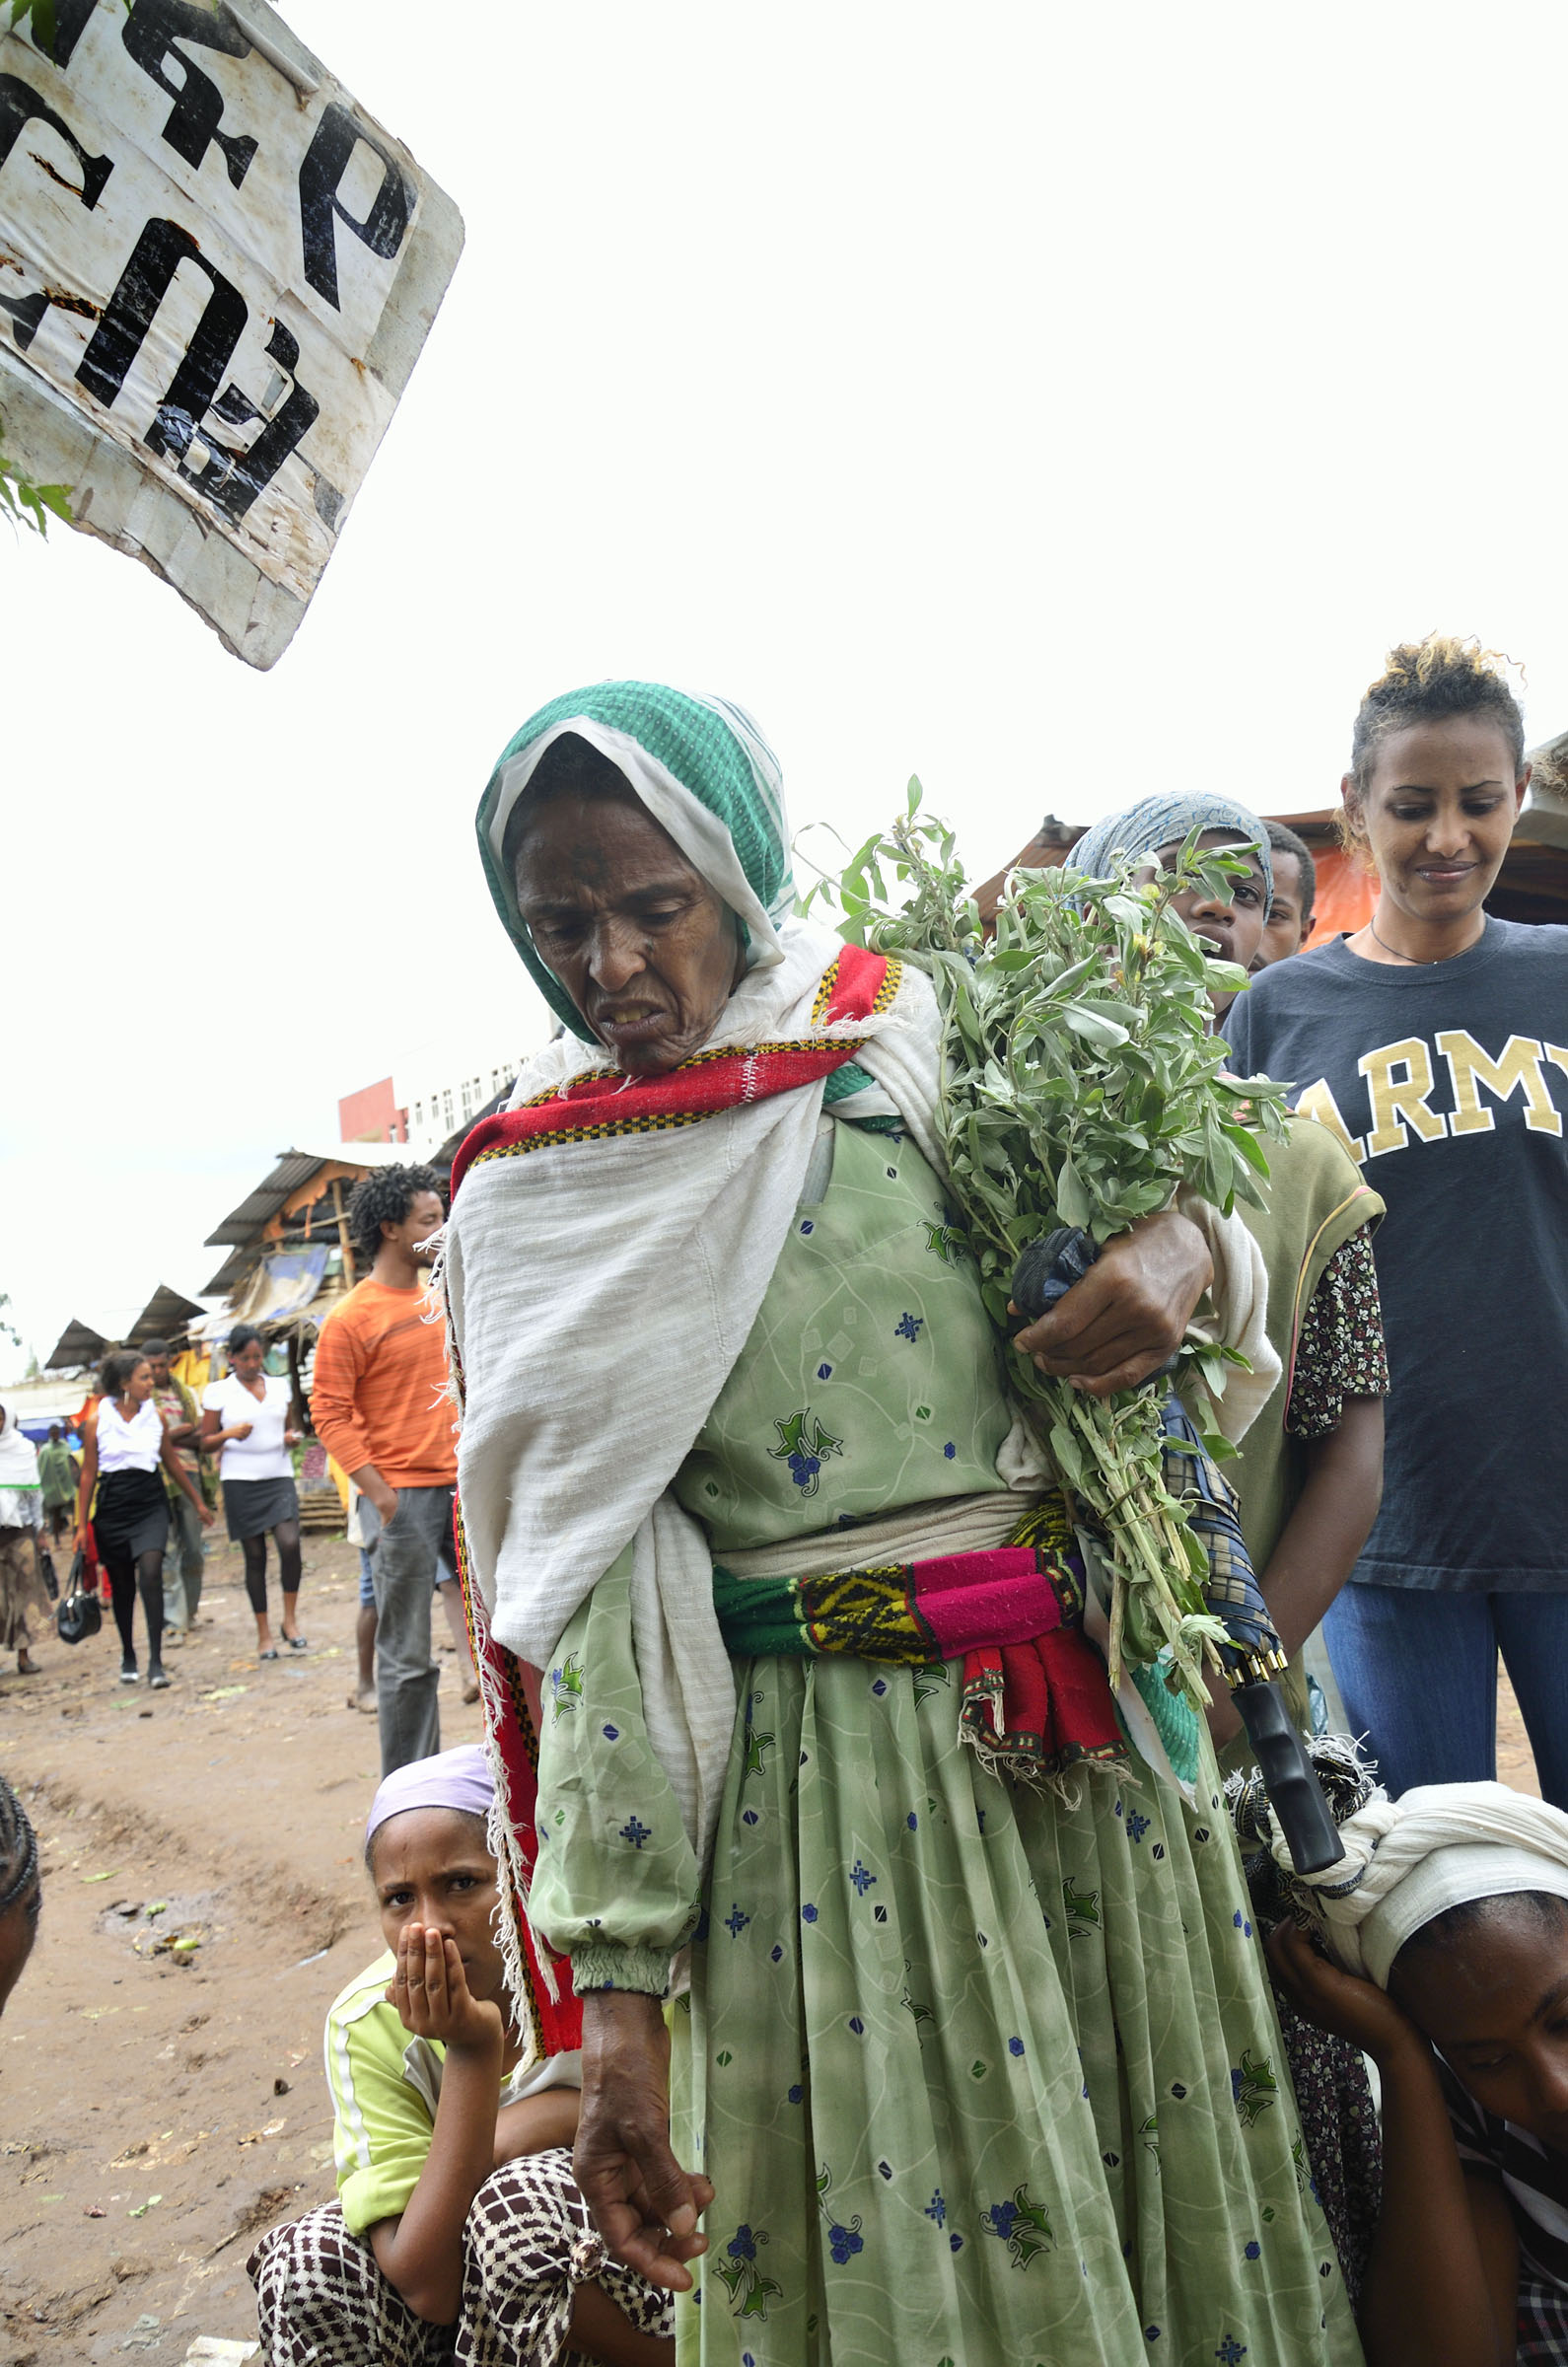 Ethiopian woman in green dress carrying herbs